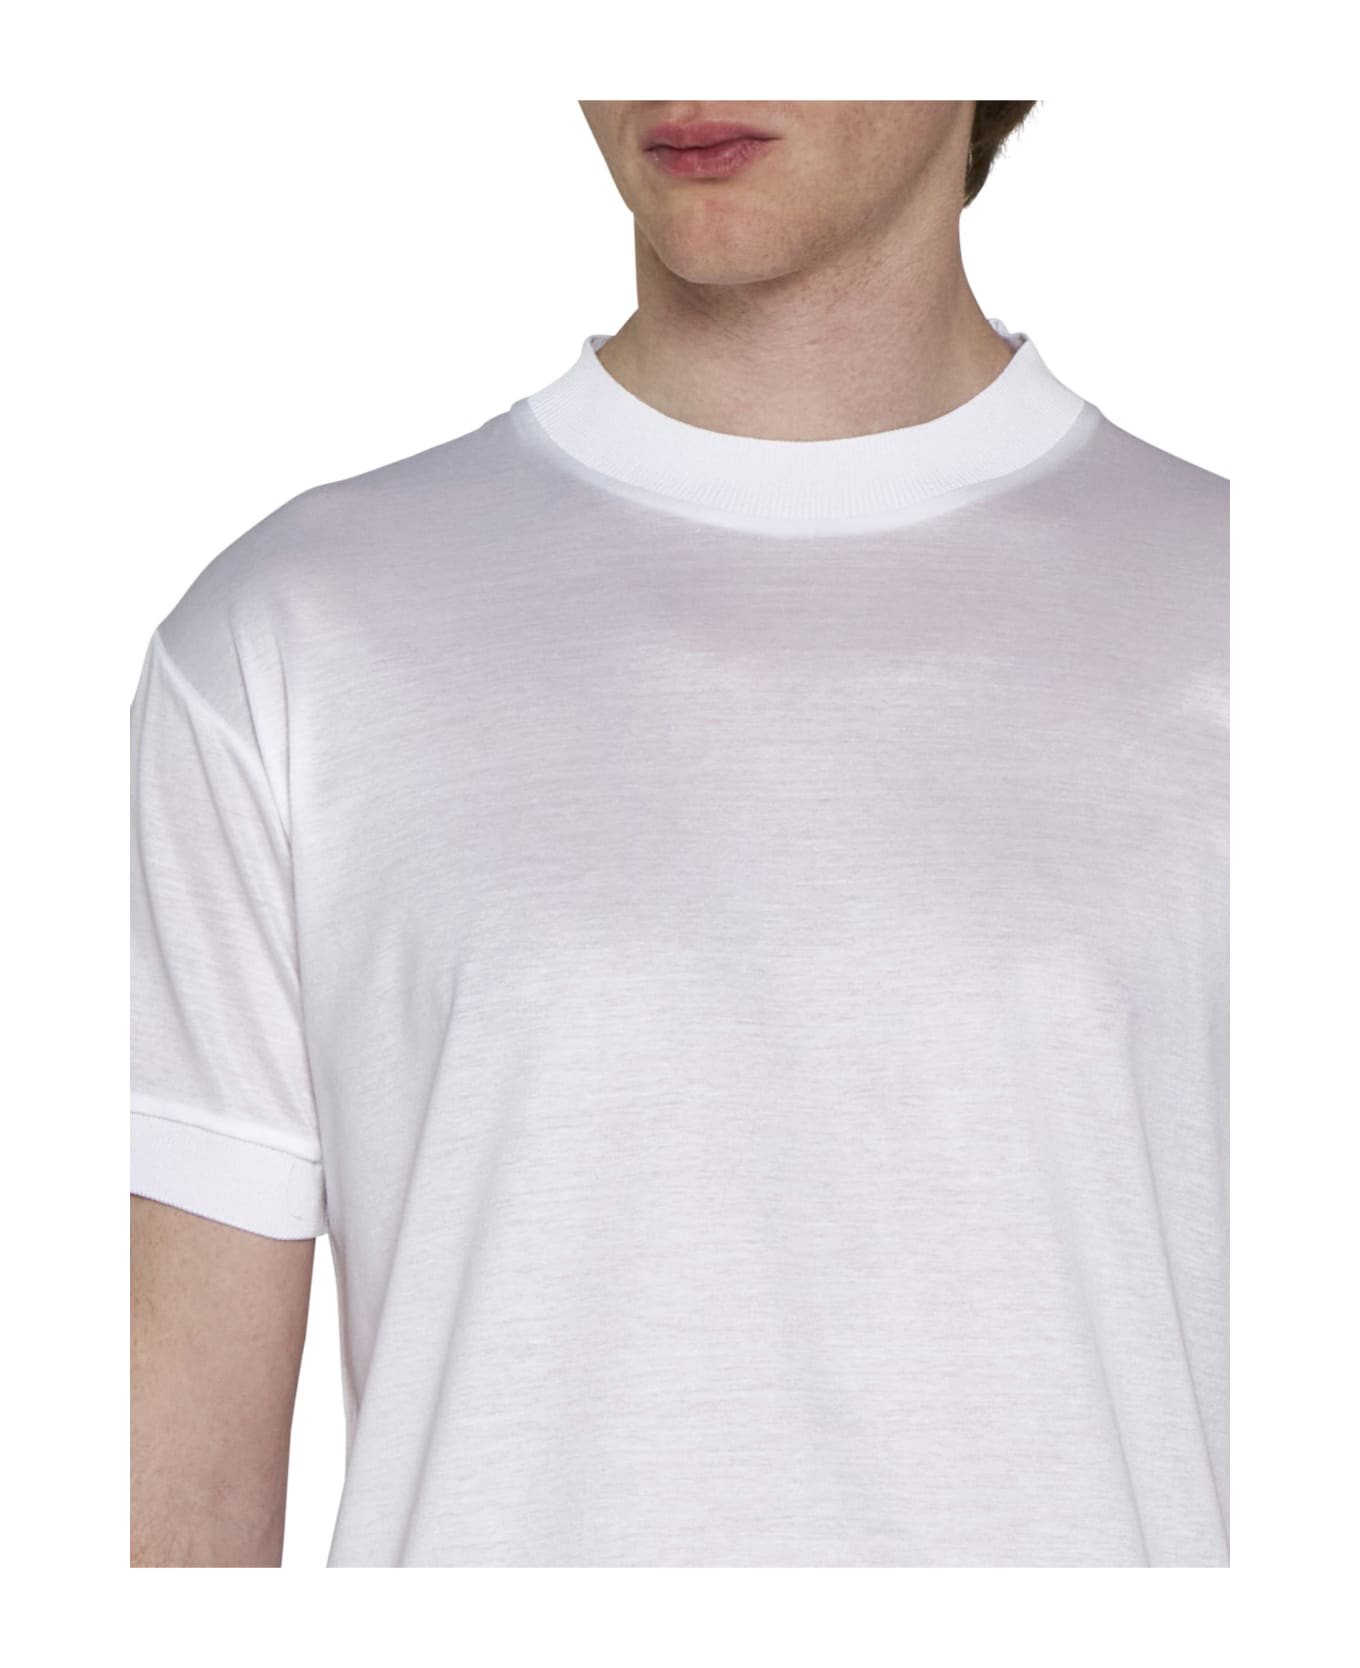 Tagliatore T-Shirt - White